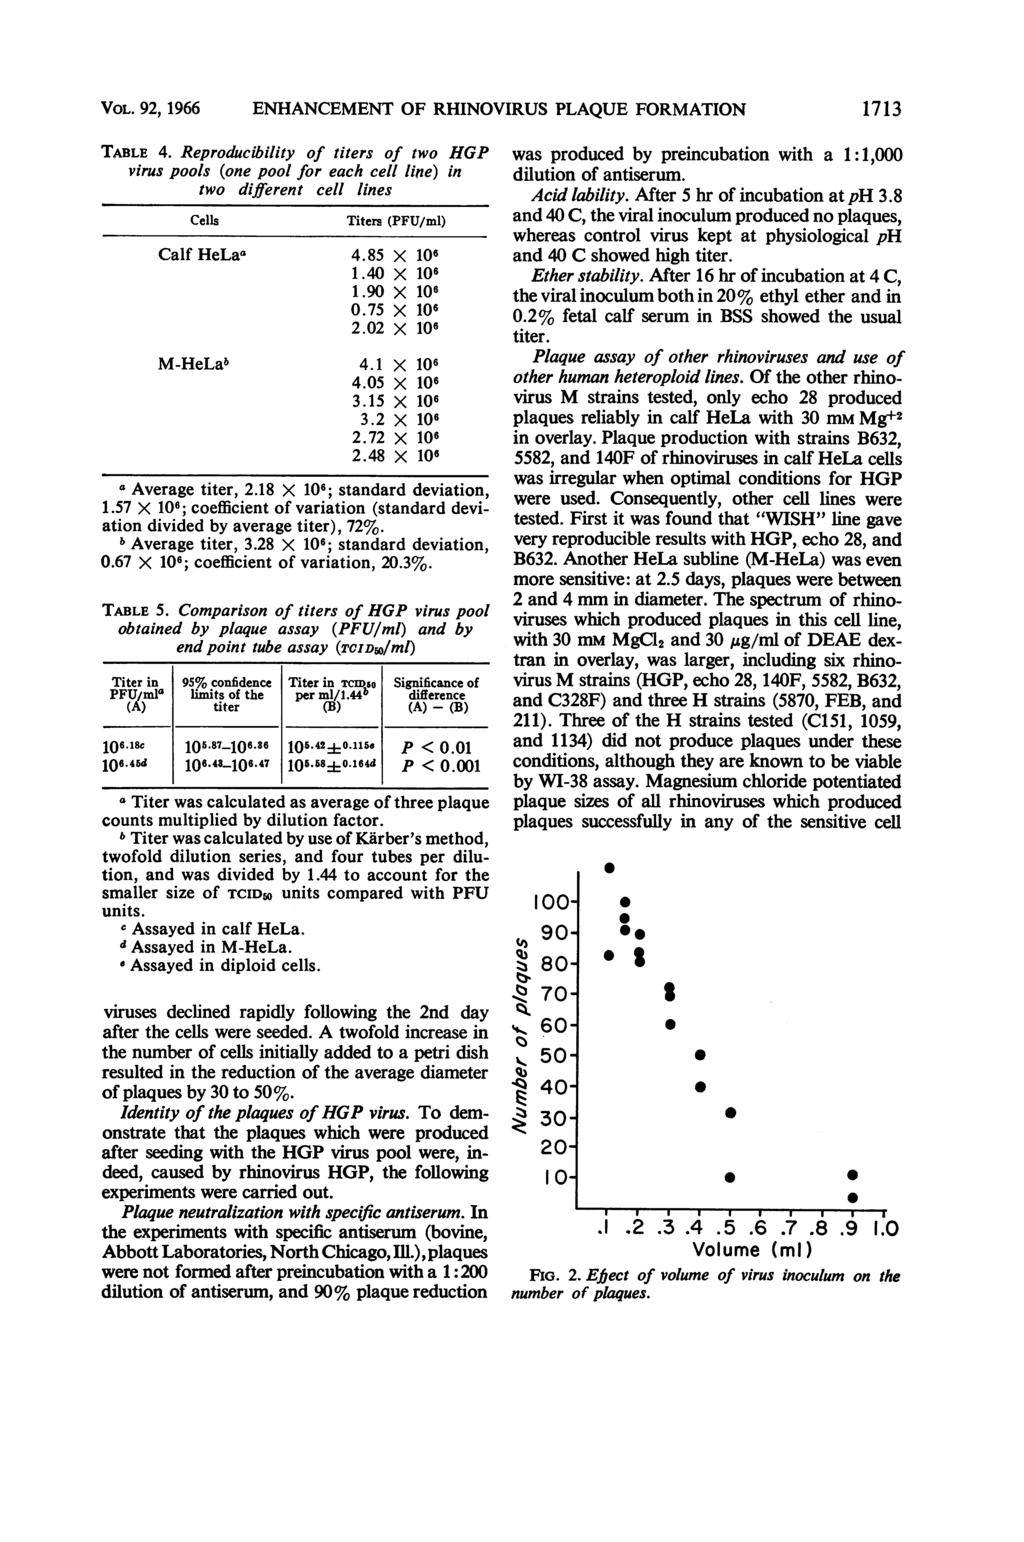 VOL. 92, 1966 ENHANCEMENT OF RHINOVIRUS PLAQUE FORMATION 1713 TABLE 4.